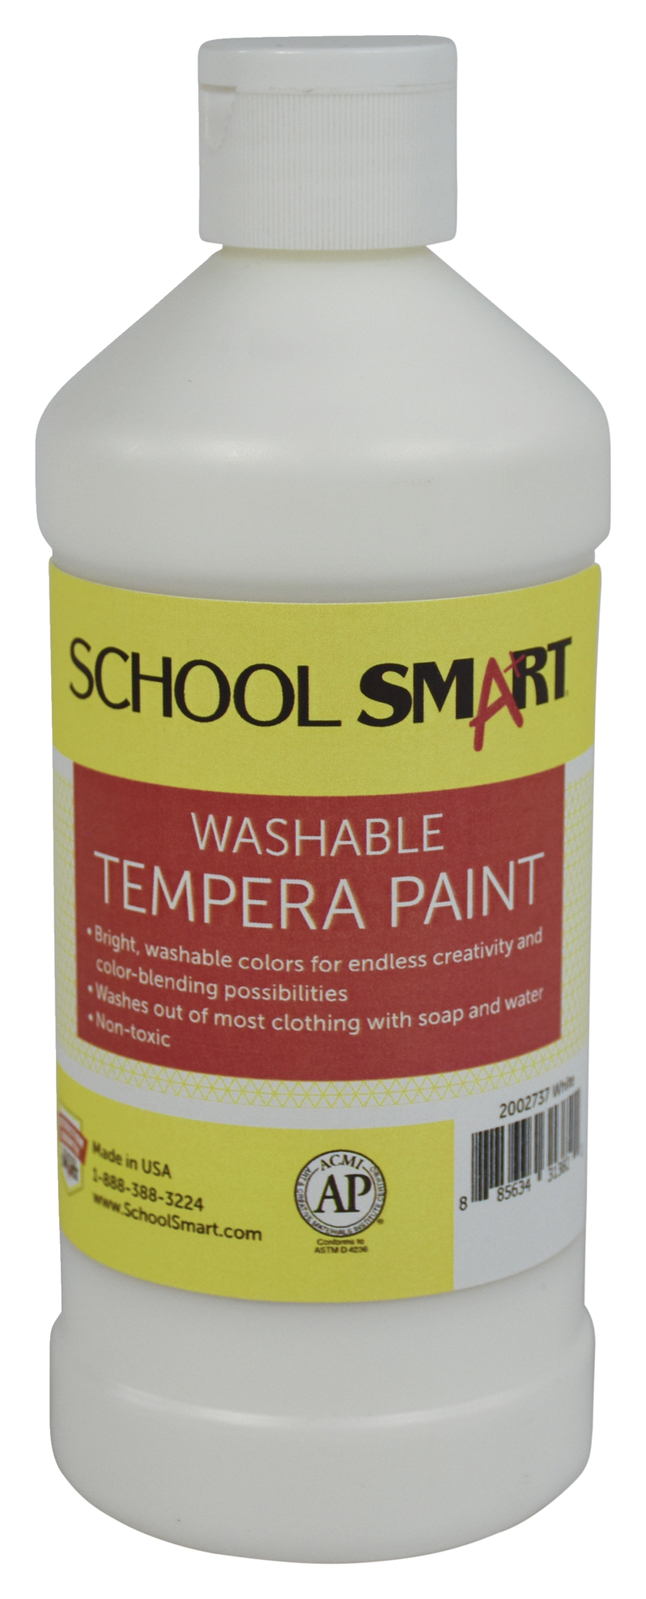 School Smart Washable Tempera Paint, Pint, White, Item Number 2002737